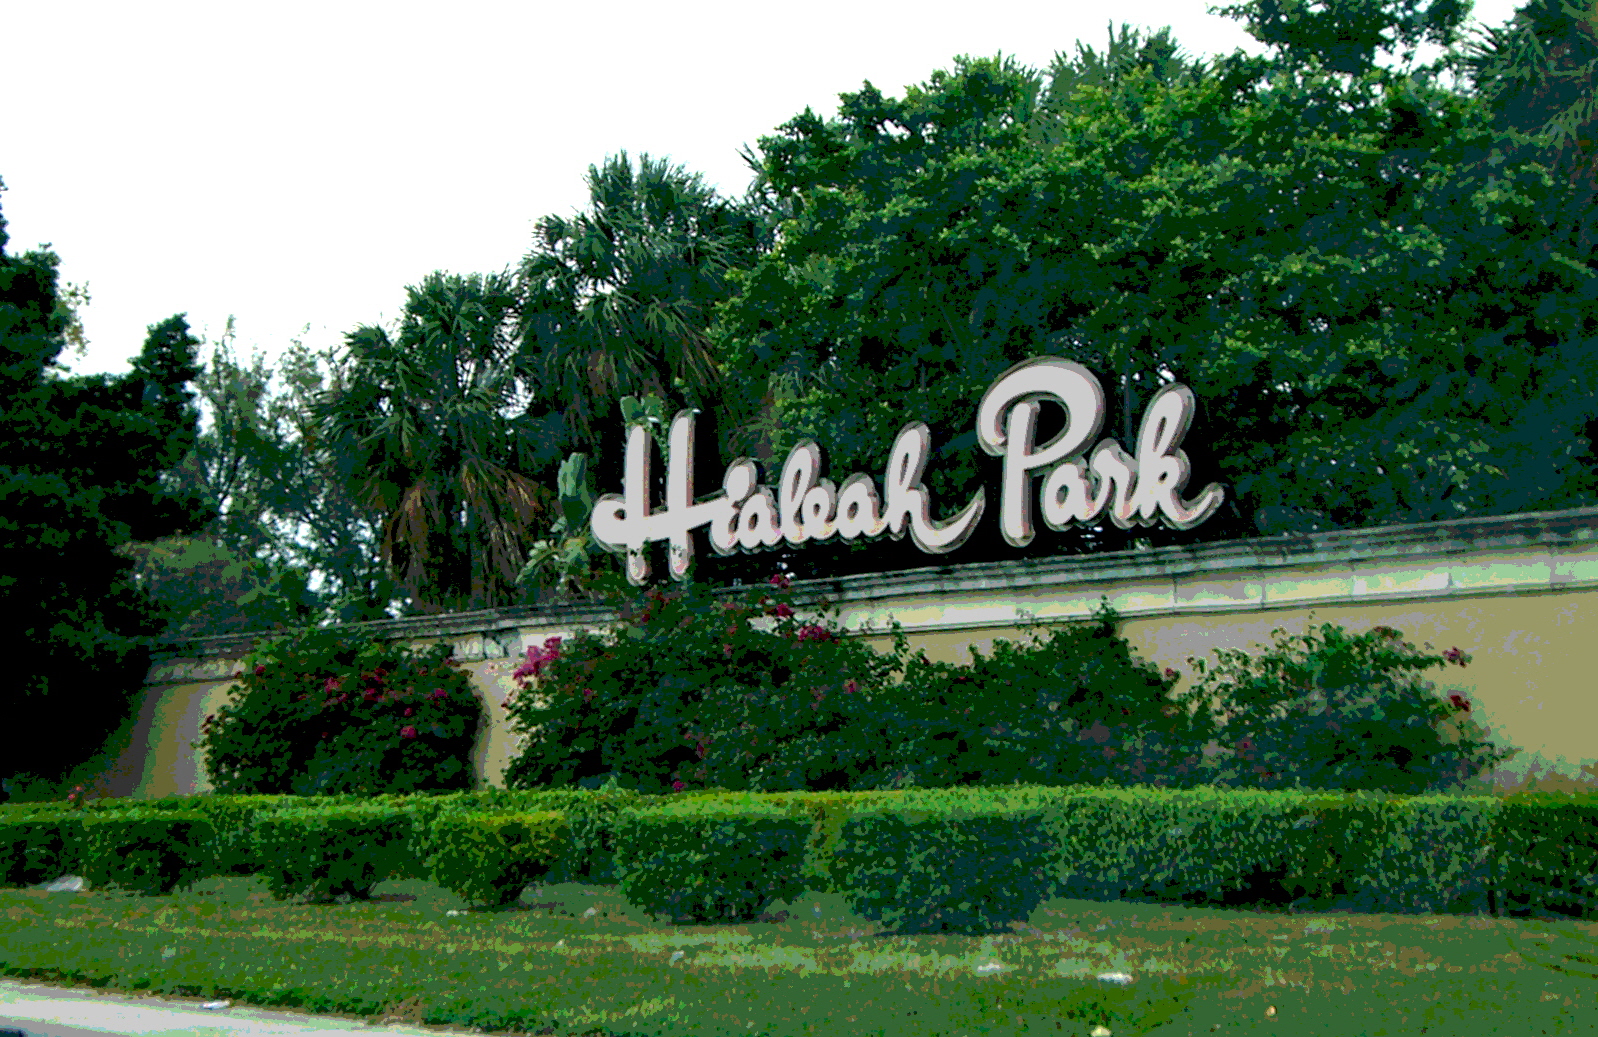 hialeah park